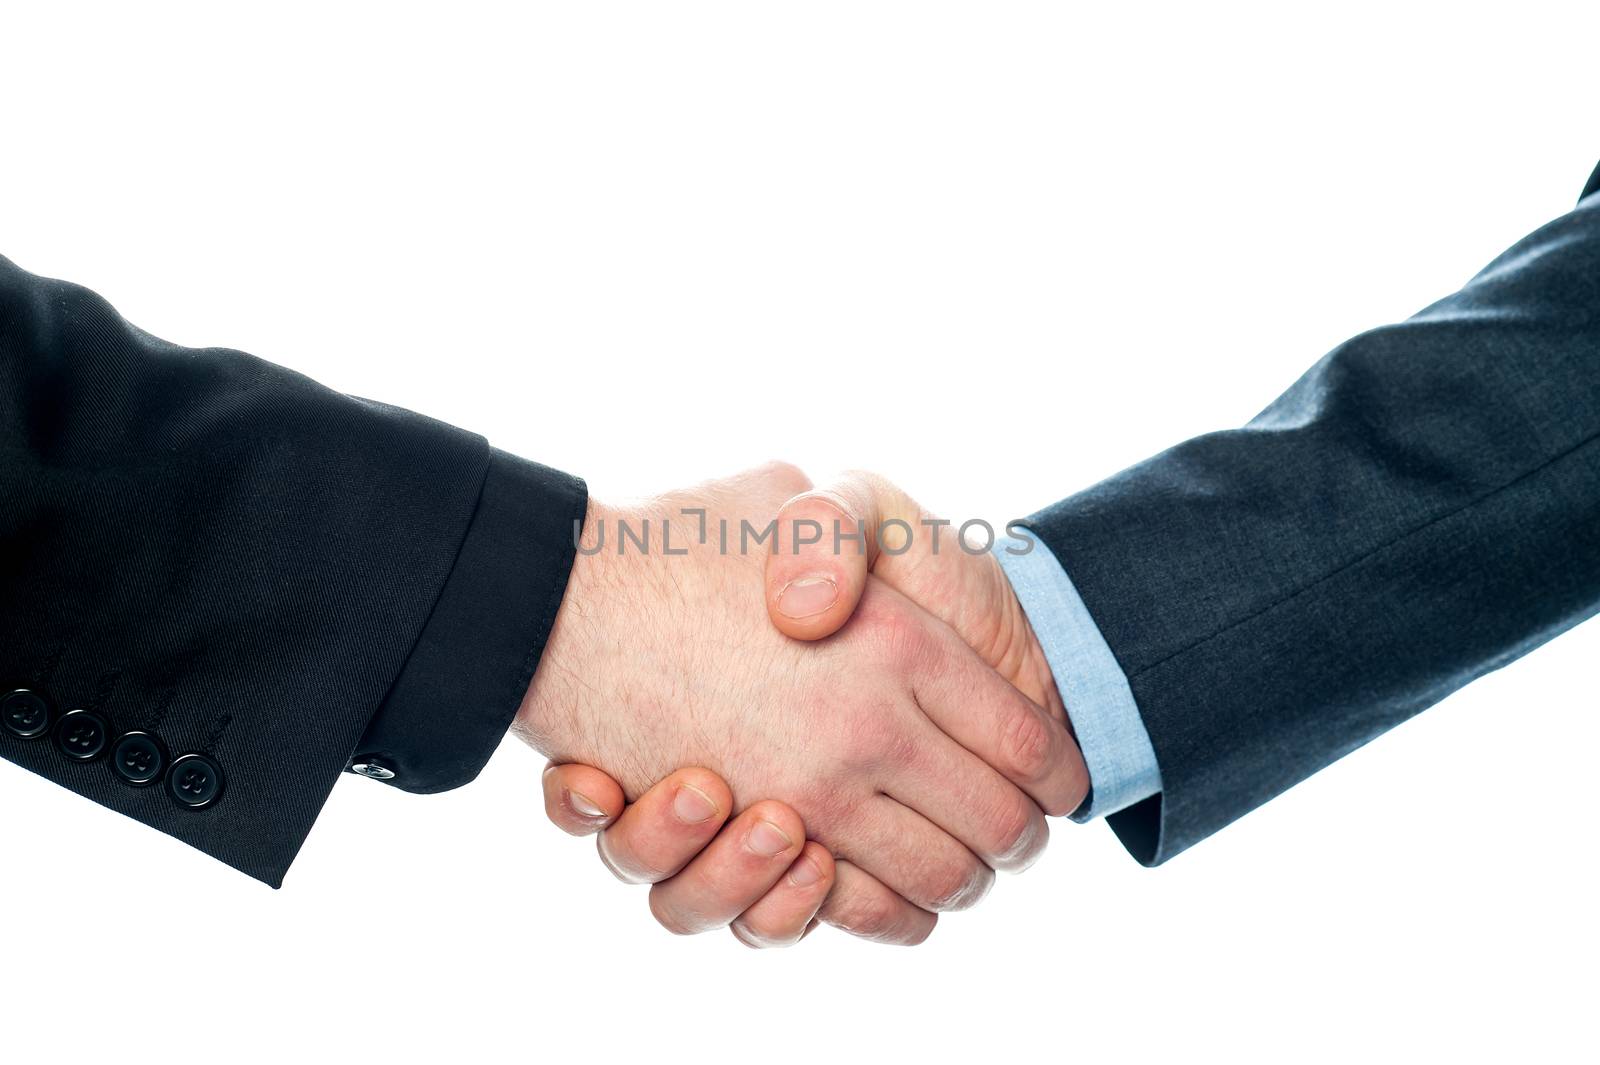 Handshake of business partners after striking deal